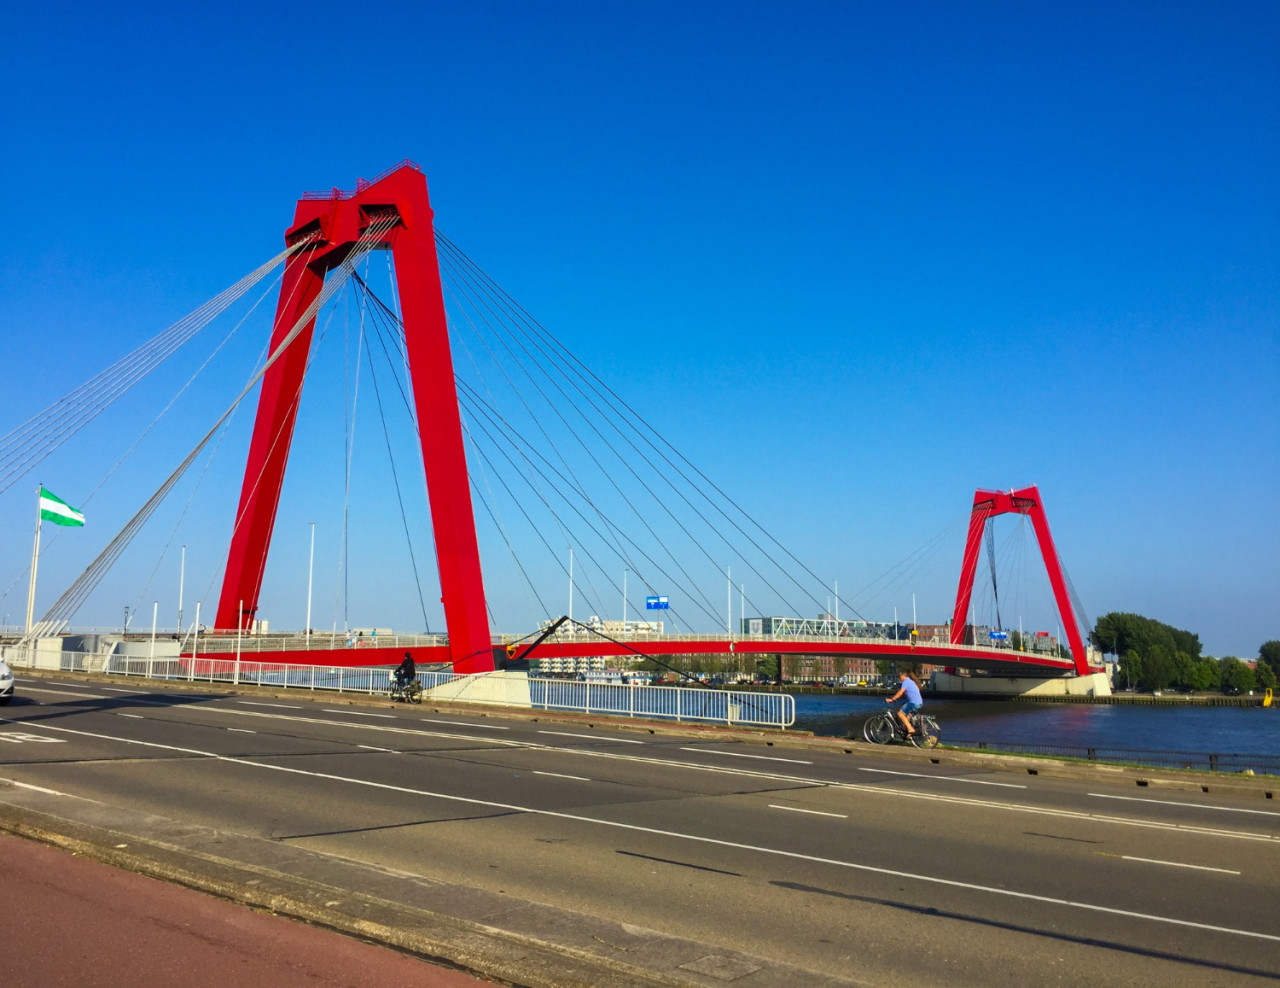 willemsbrug bridge spanning nieuwe maas river rotterdam netherlands red bridge pylons